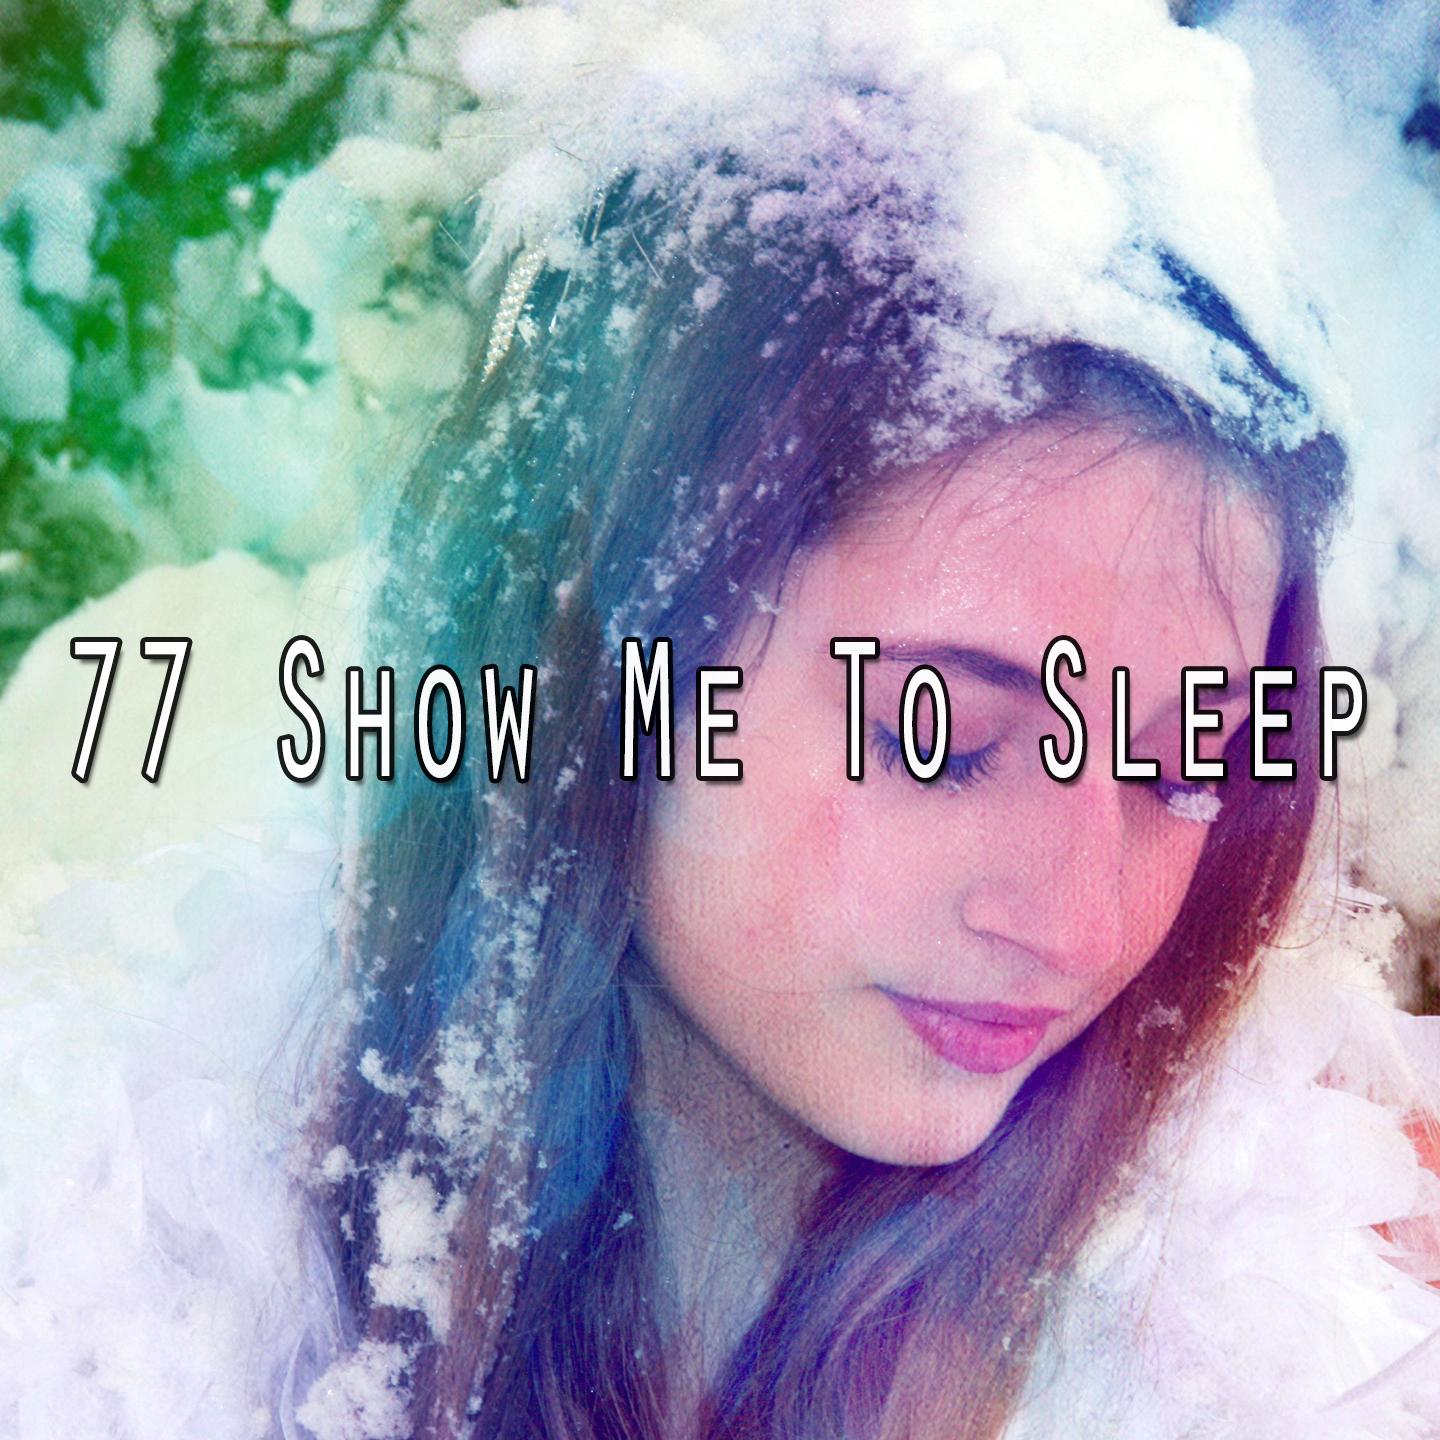 77 Show Me to Sleep